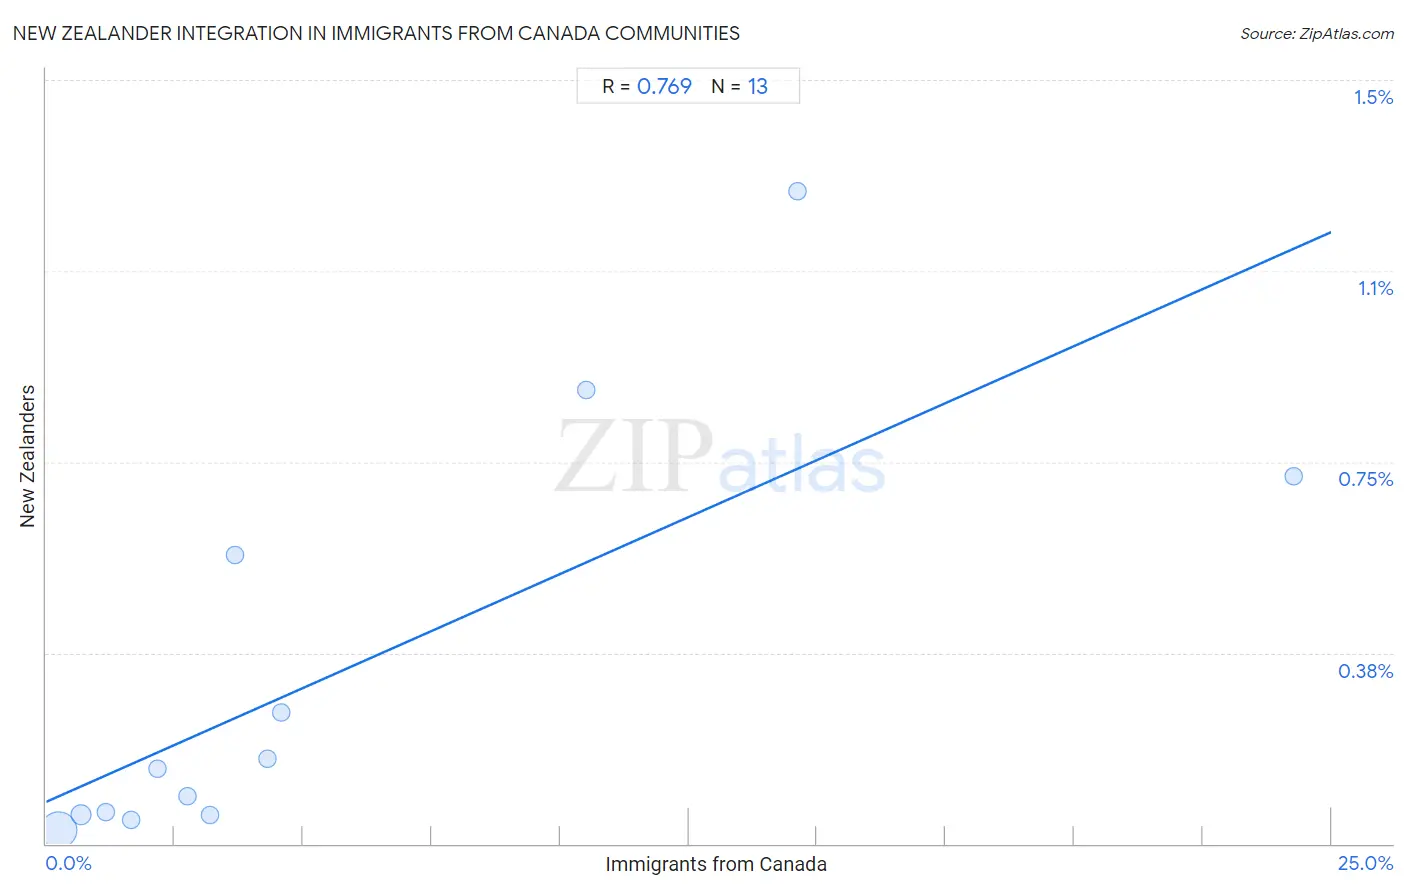 Immigrants from Canada Integration in New Zealander Communities